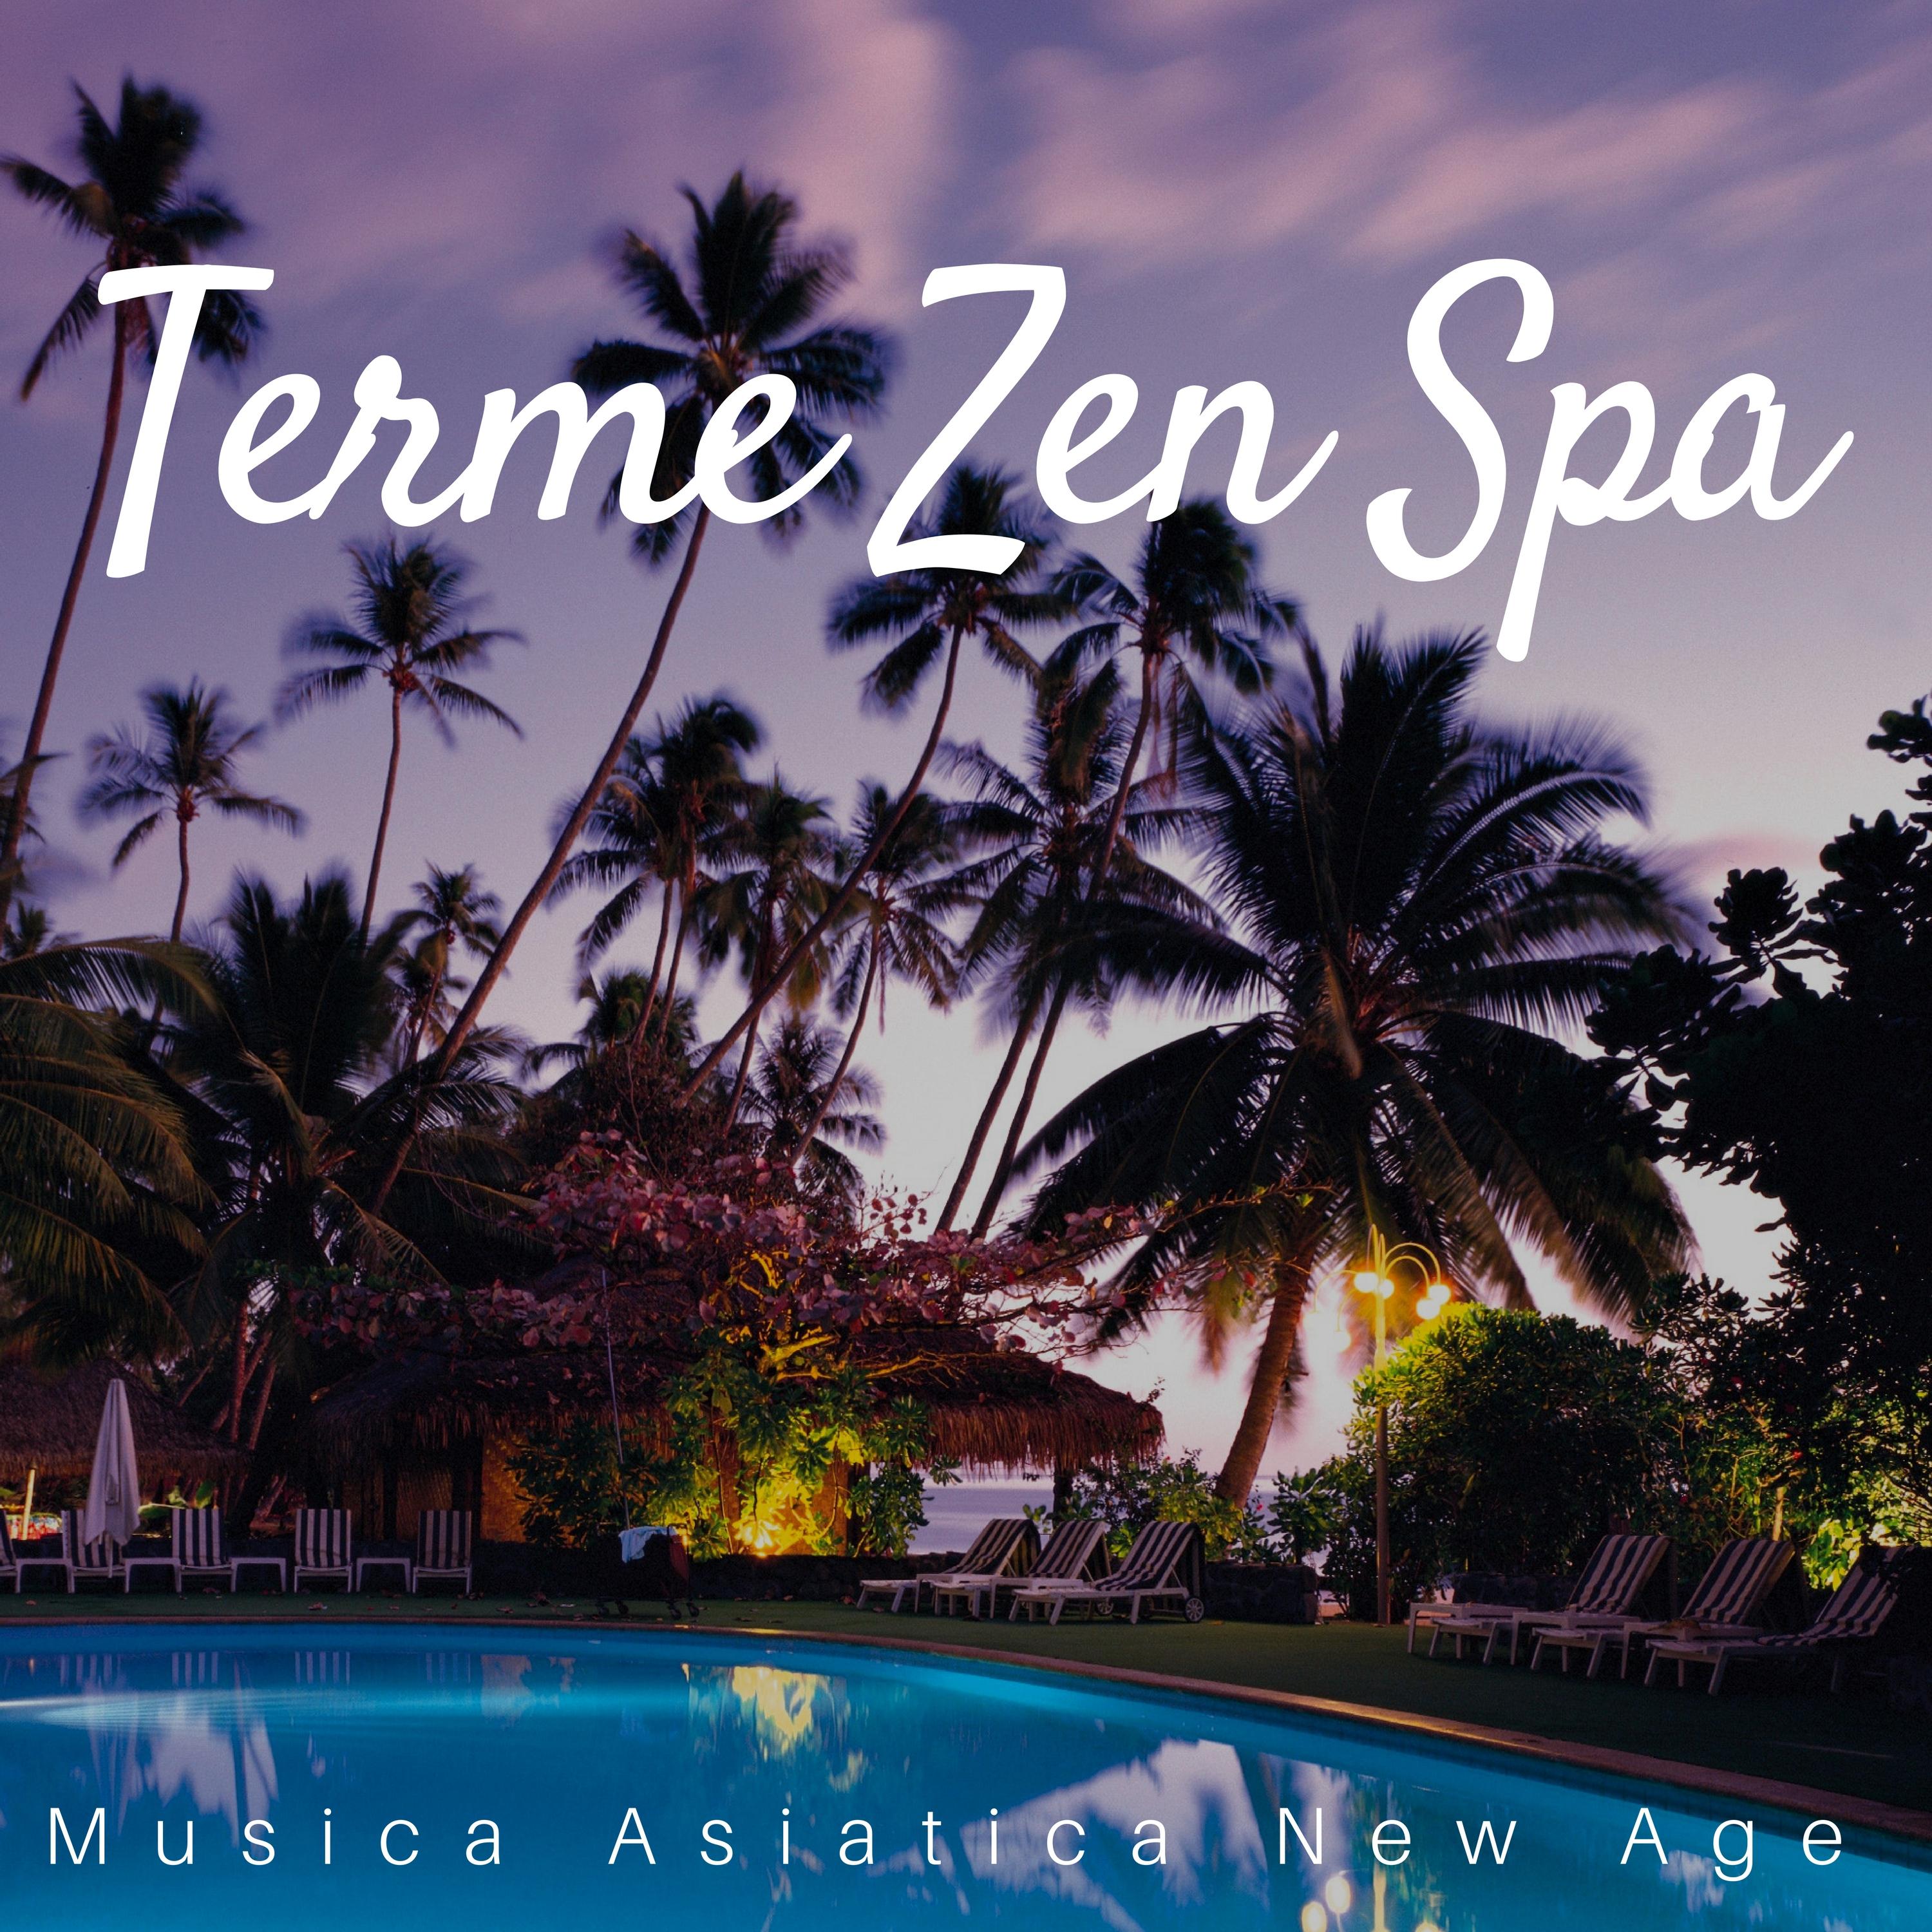 Terme Zen Spa: Musica Asiatica New Age per Massaggi, Sauna, Piscine Termali, Yoga e Meditazione